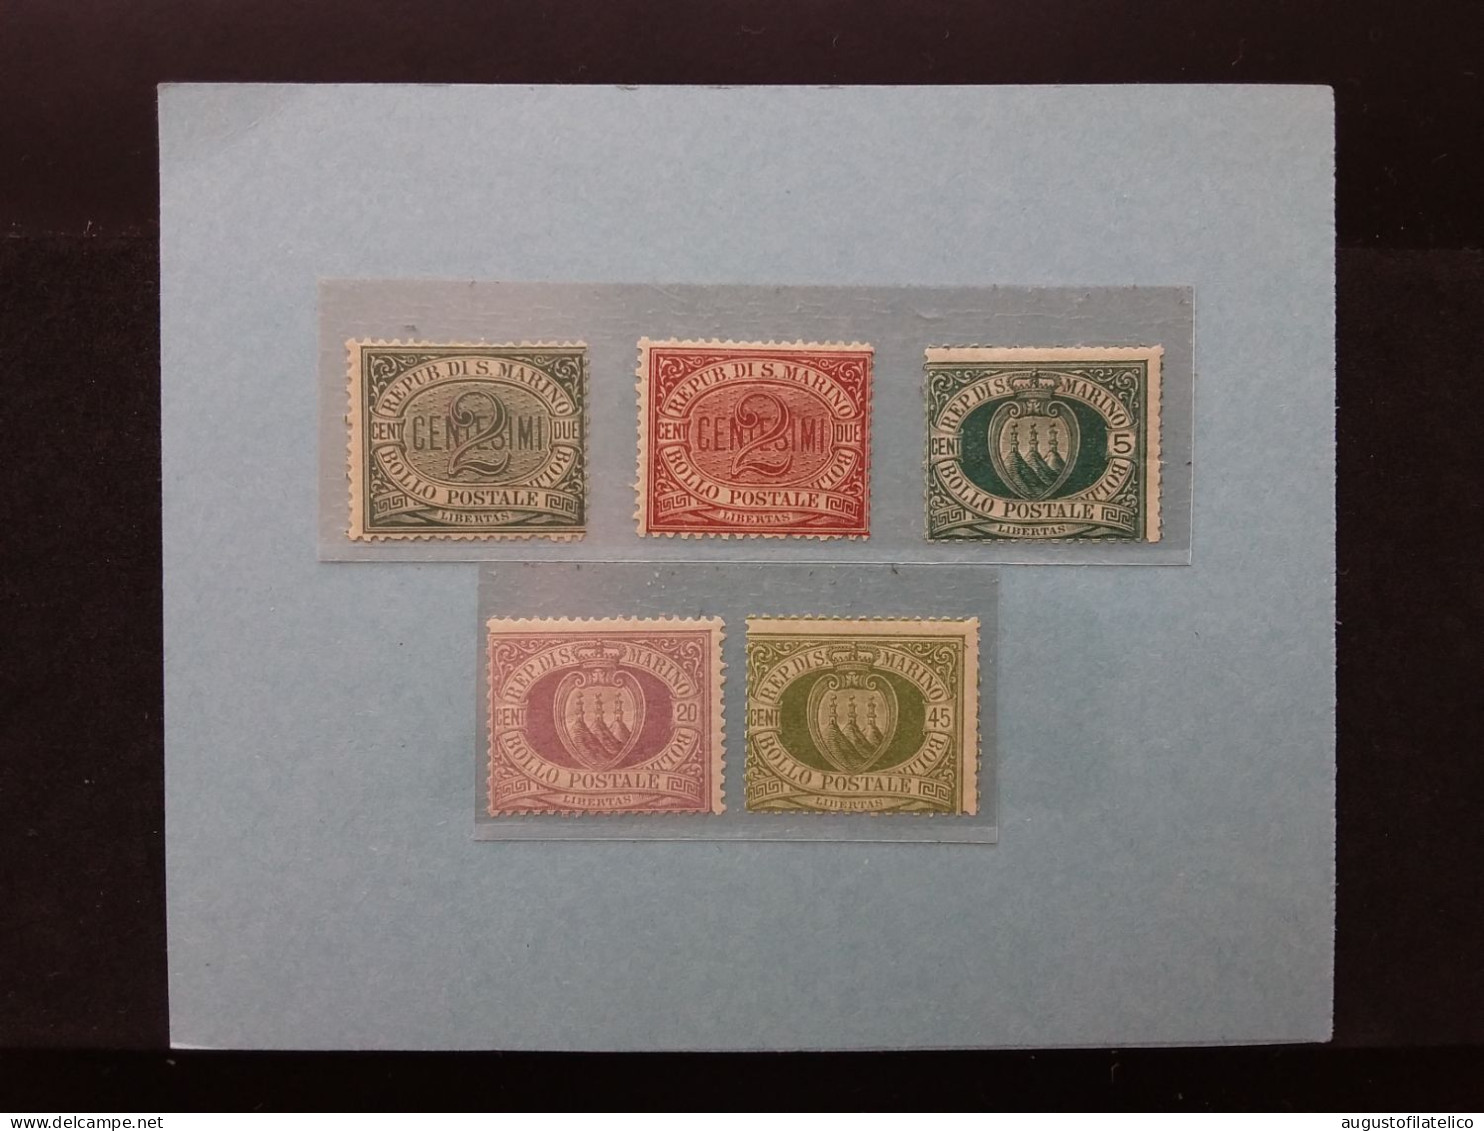 SAN MARINO 1877/92 - C. 45 Nuovo ** - Altri Nuovi * + Spese Postali - Unused Stamps